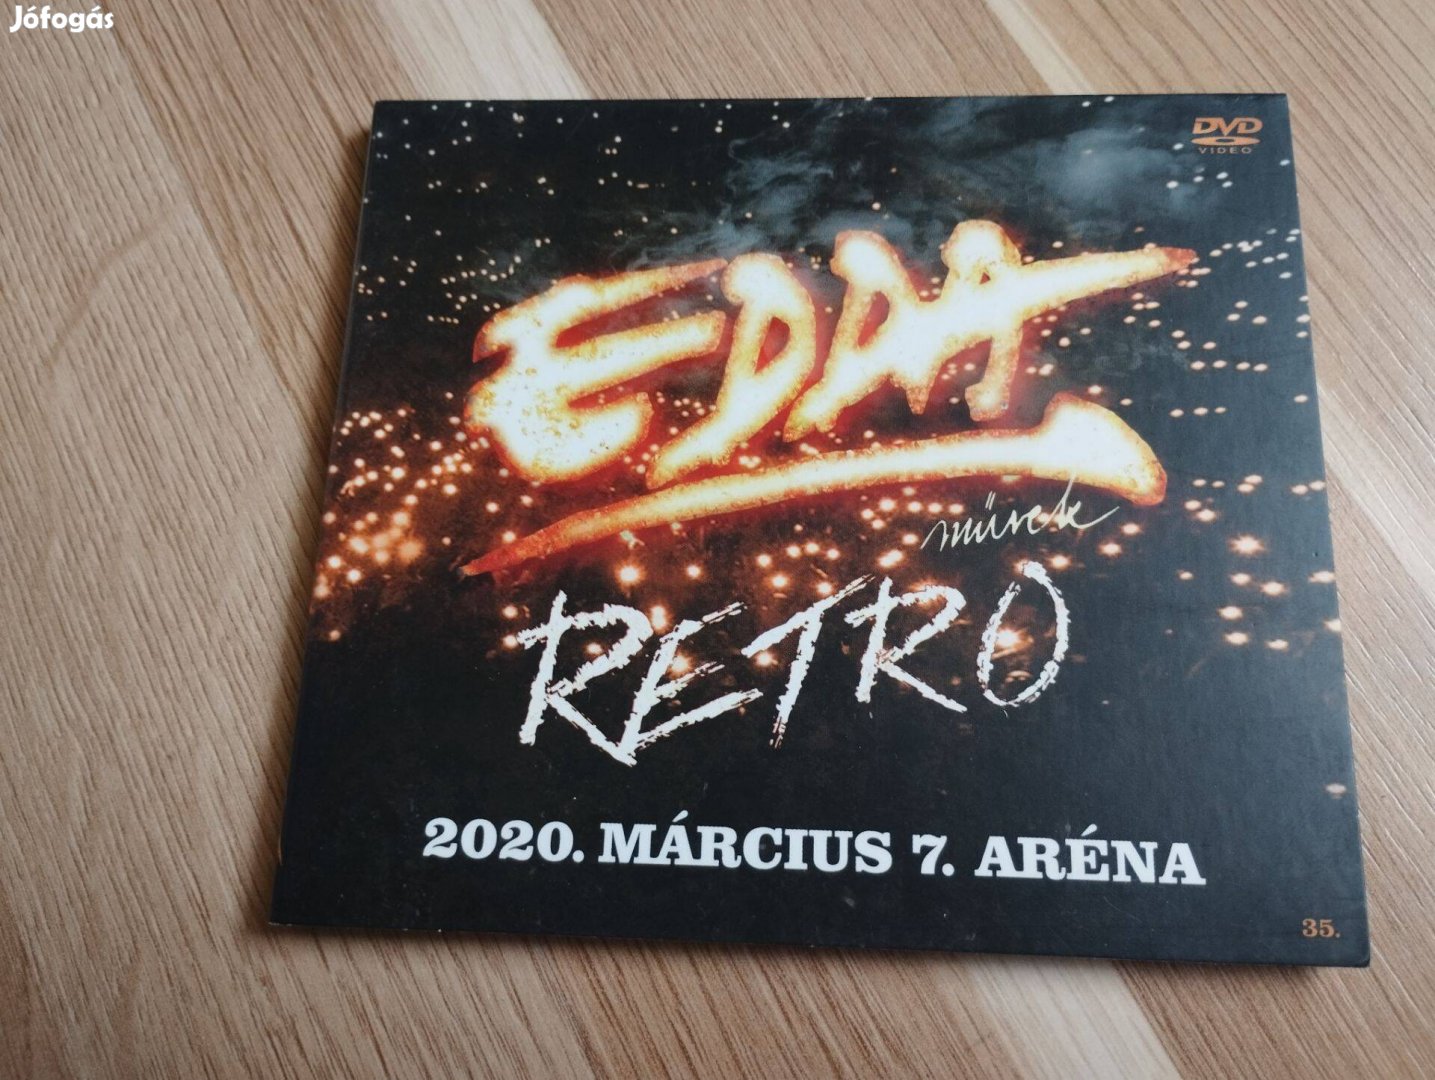 Edda művek -Retro DVD